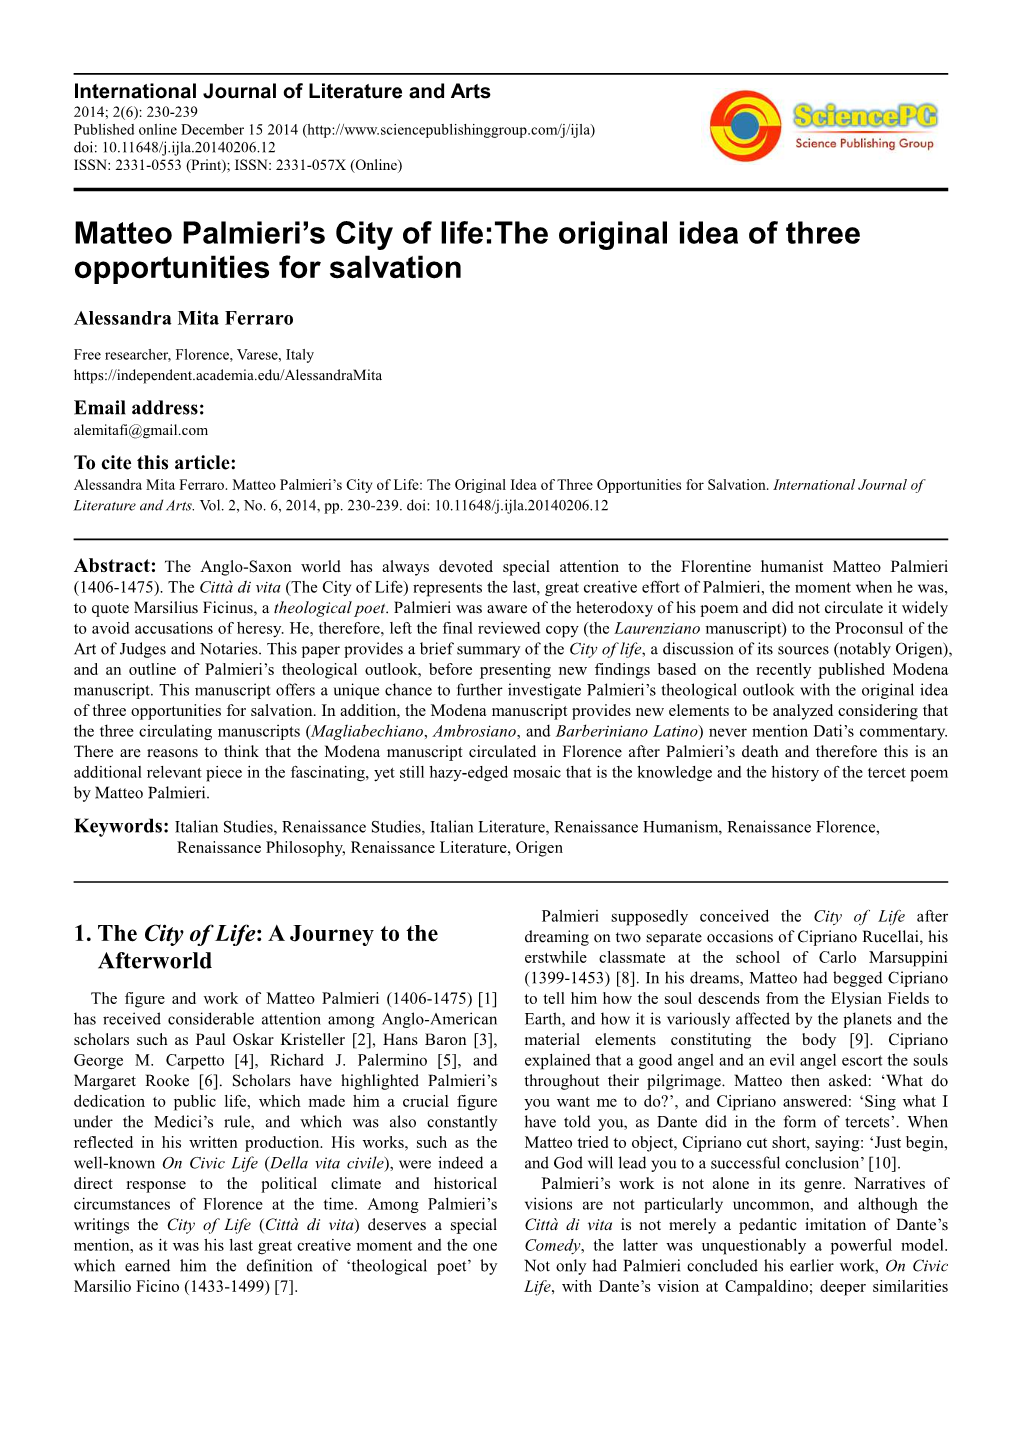 Matteo Palmieri's City of Life:The Original Idea of Three Opportunities